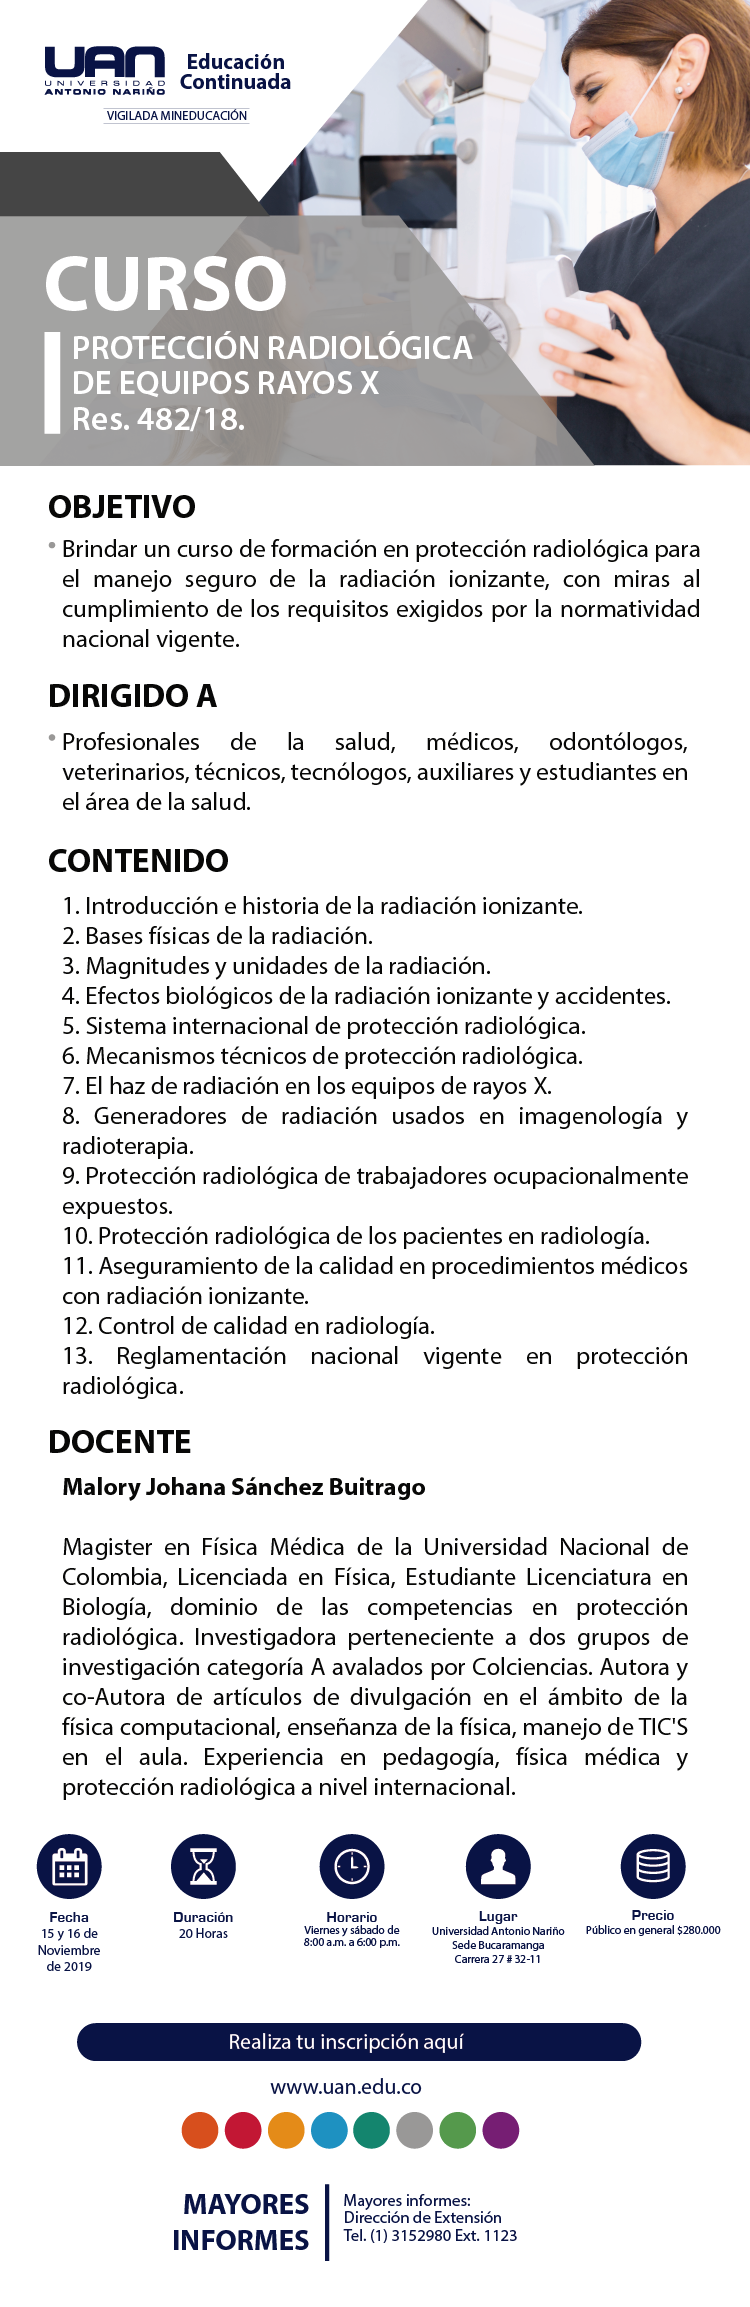 ProteccionRadiologicaEquiposRayosX Bucaramanga2019Vr5 M